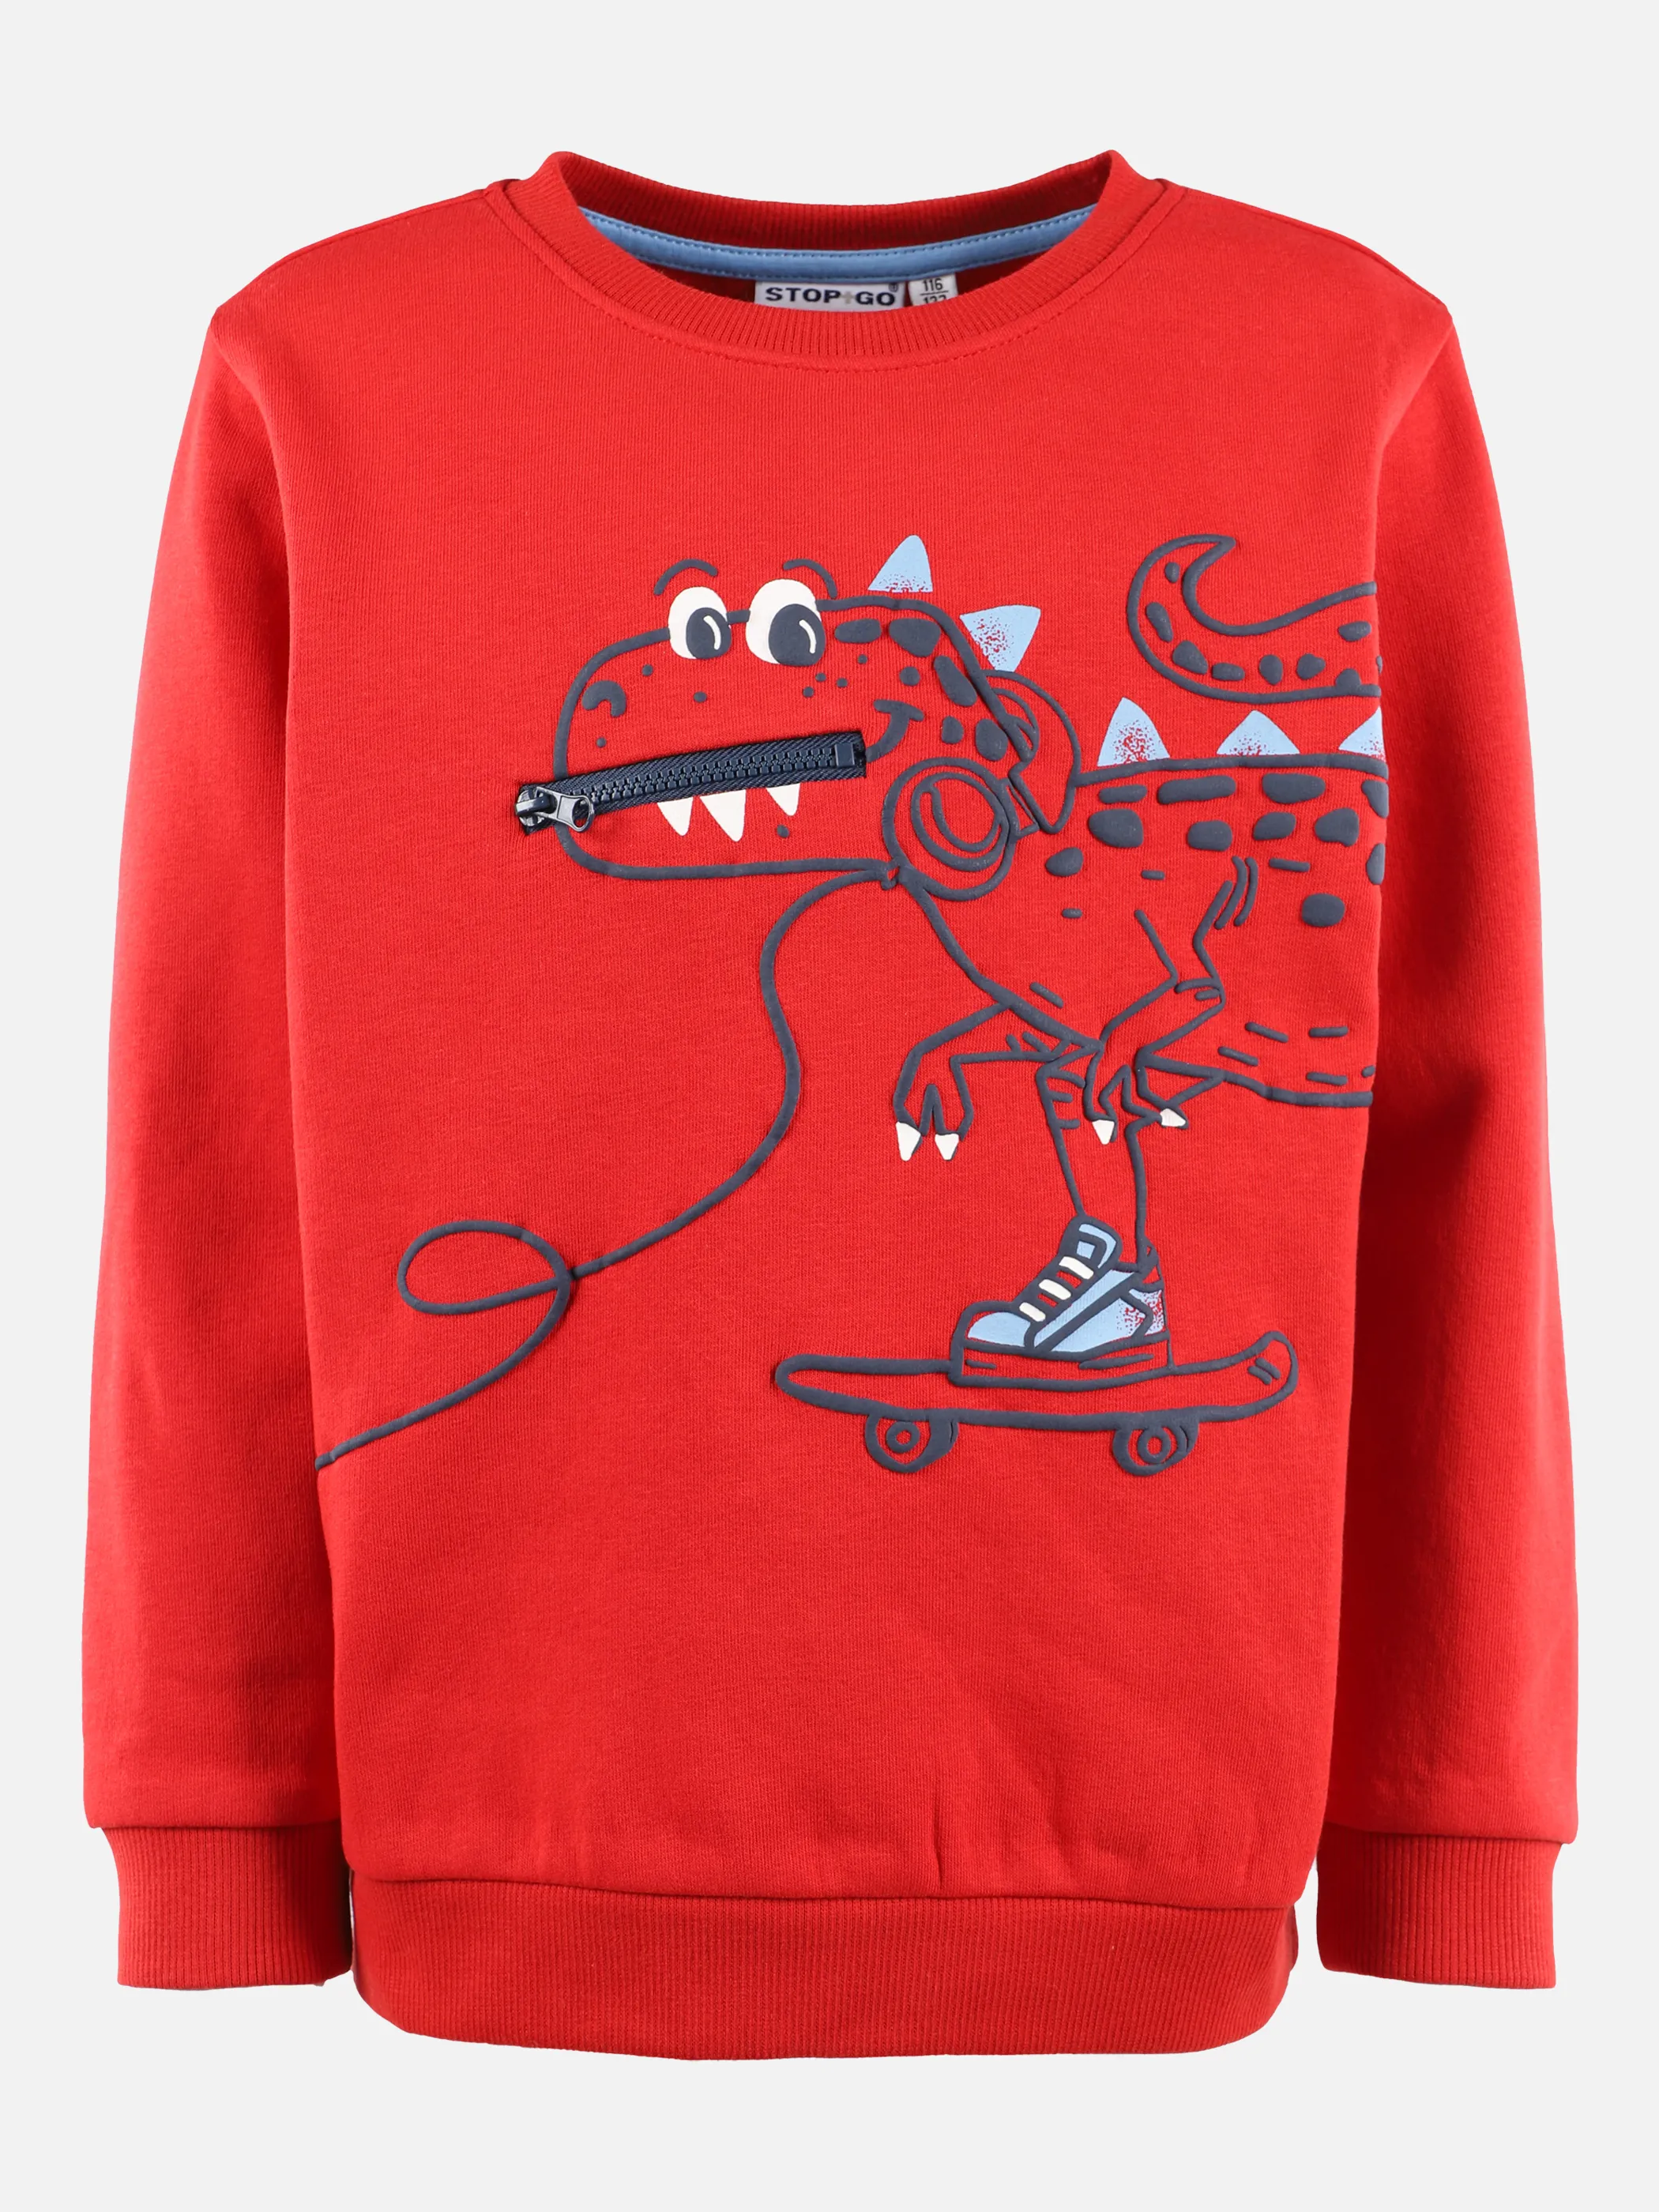 Stop + Go KJ Sweater in rot und blau mit Dino Applikation Rot 881559 ROT 1